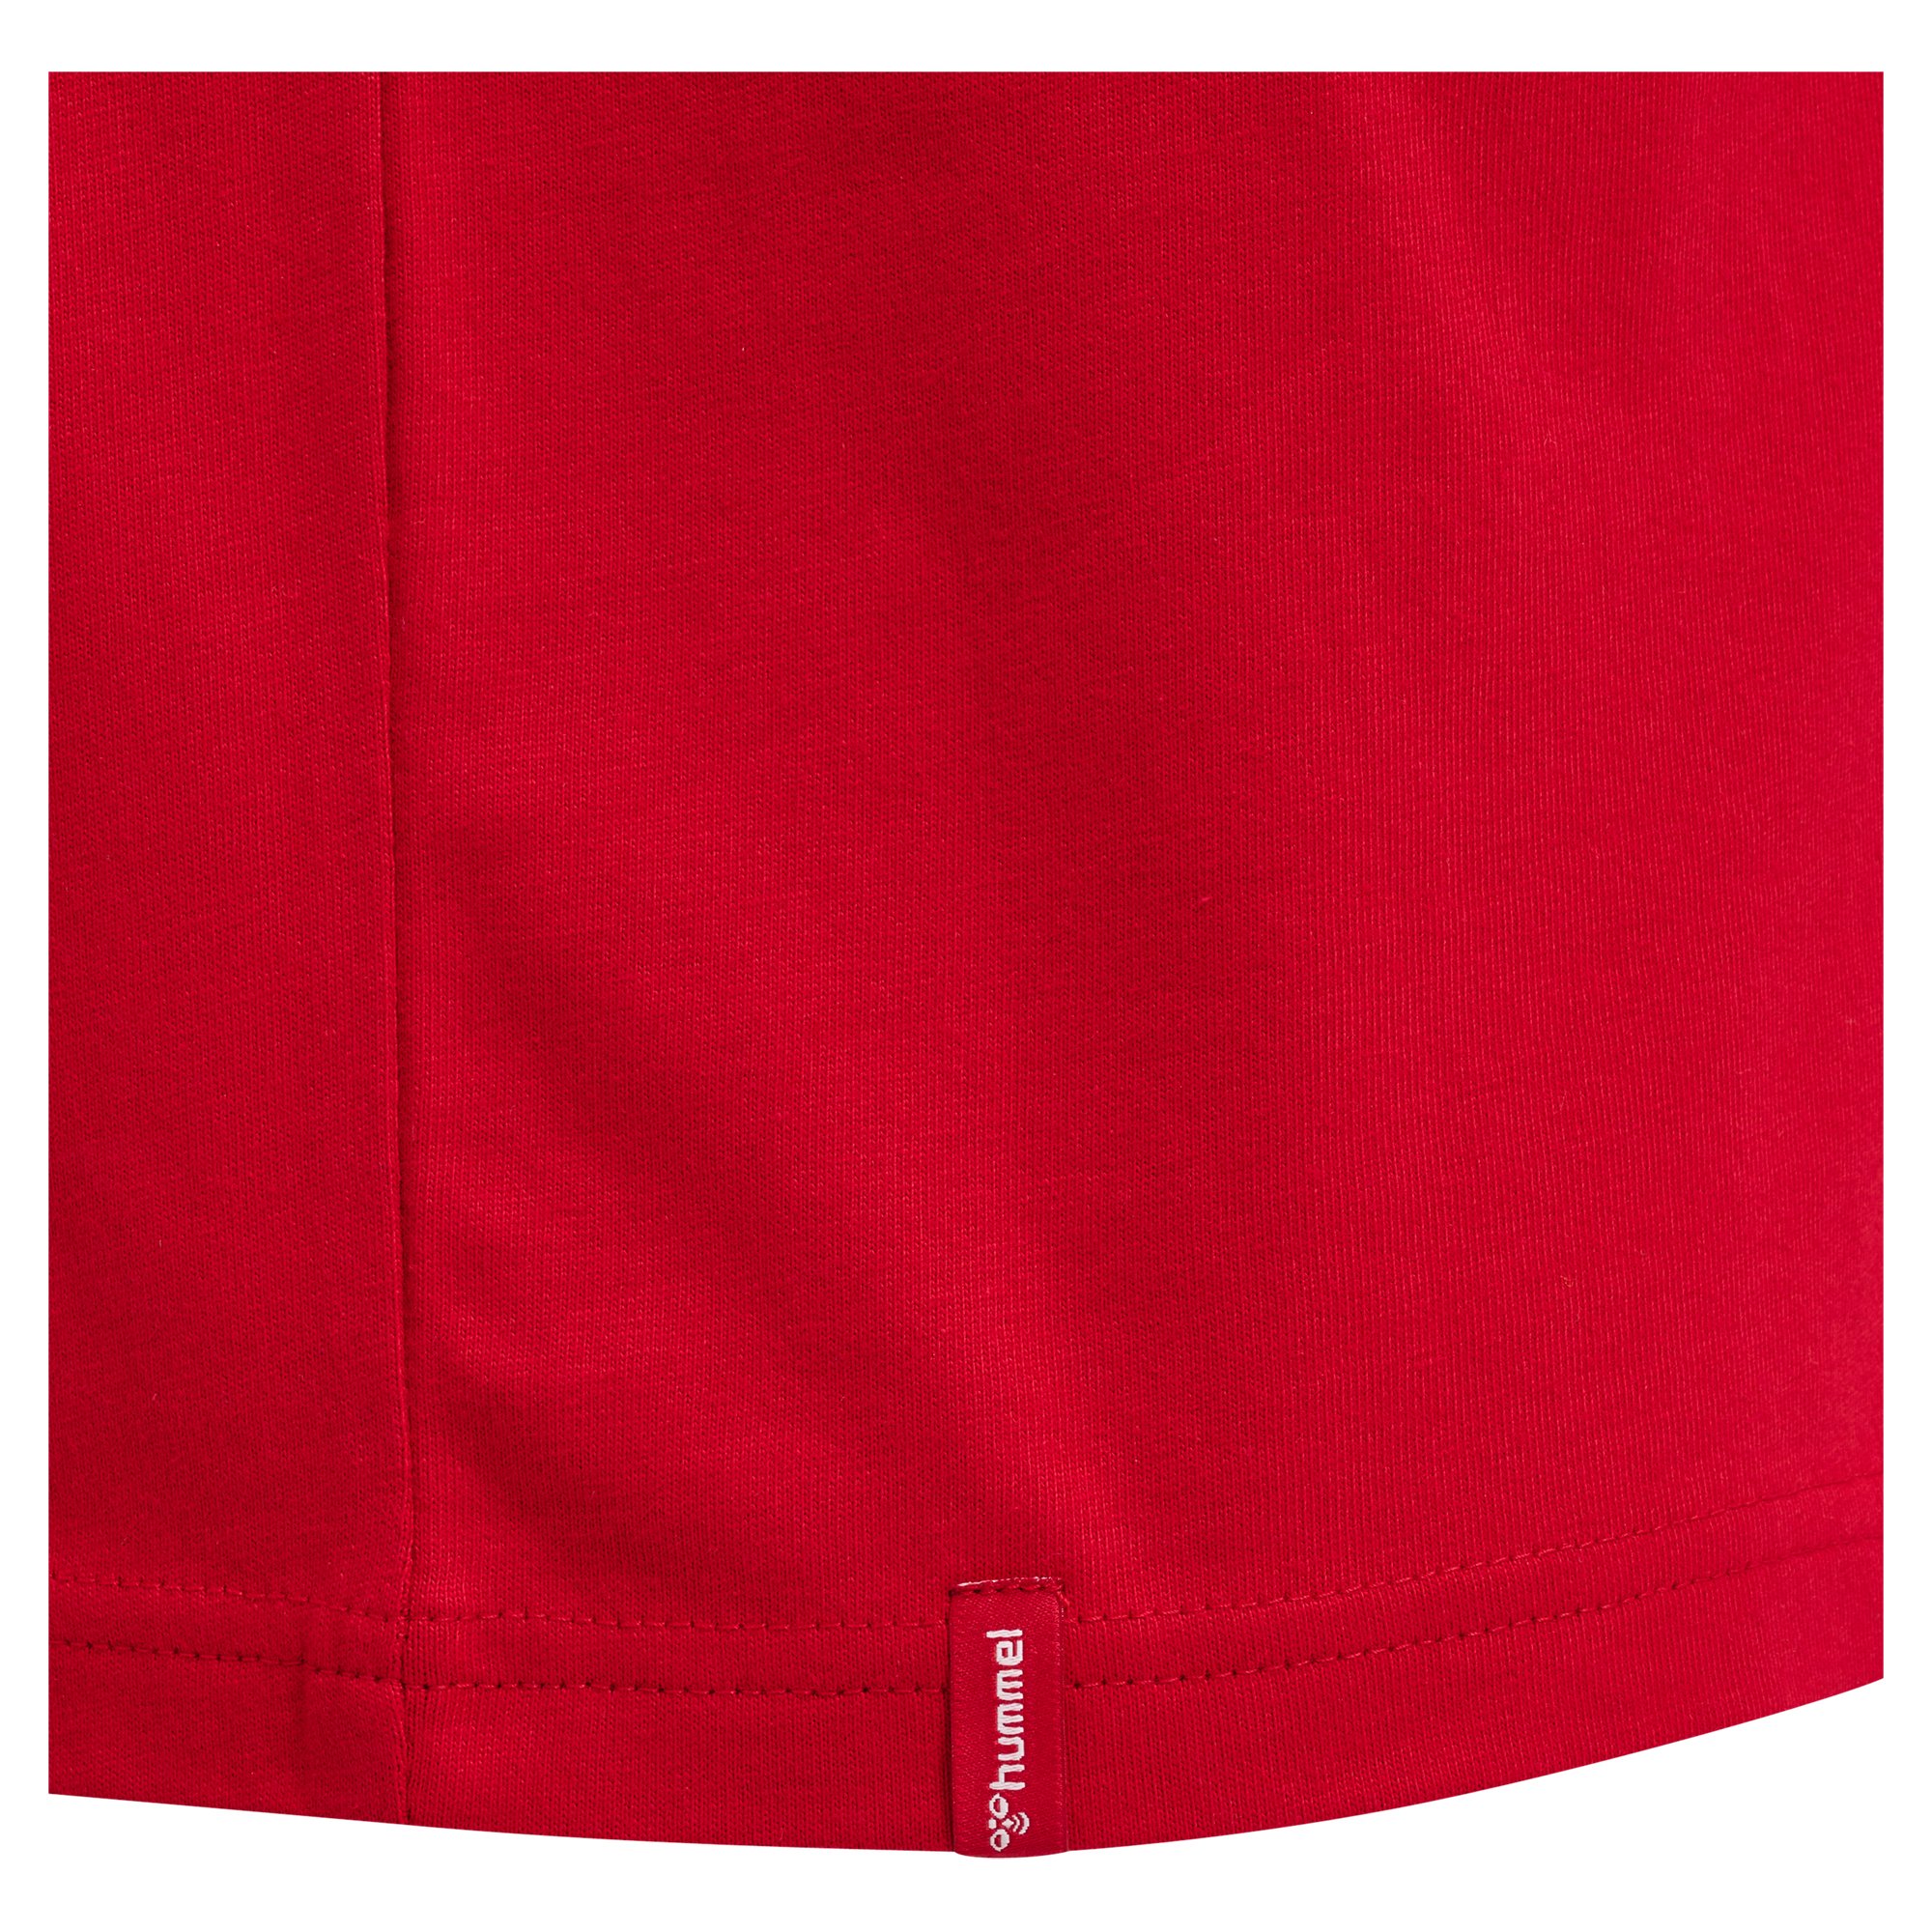 Hummel Red Heavy T-Shirt